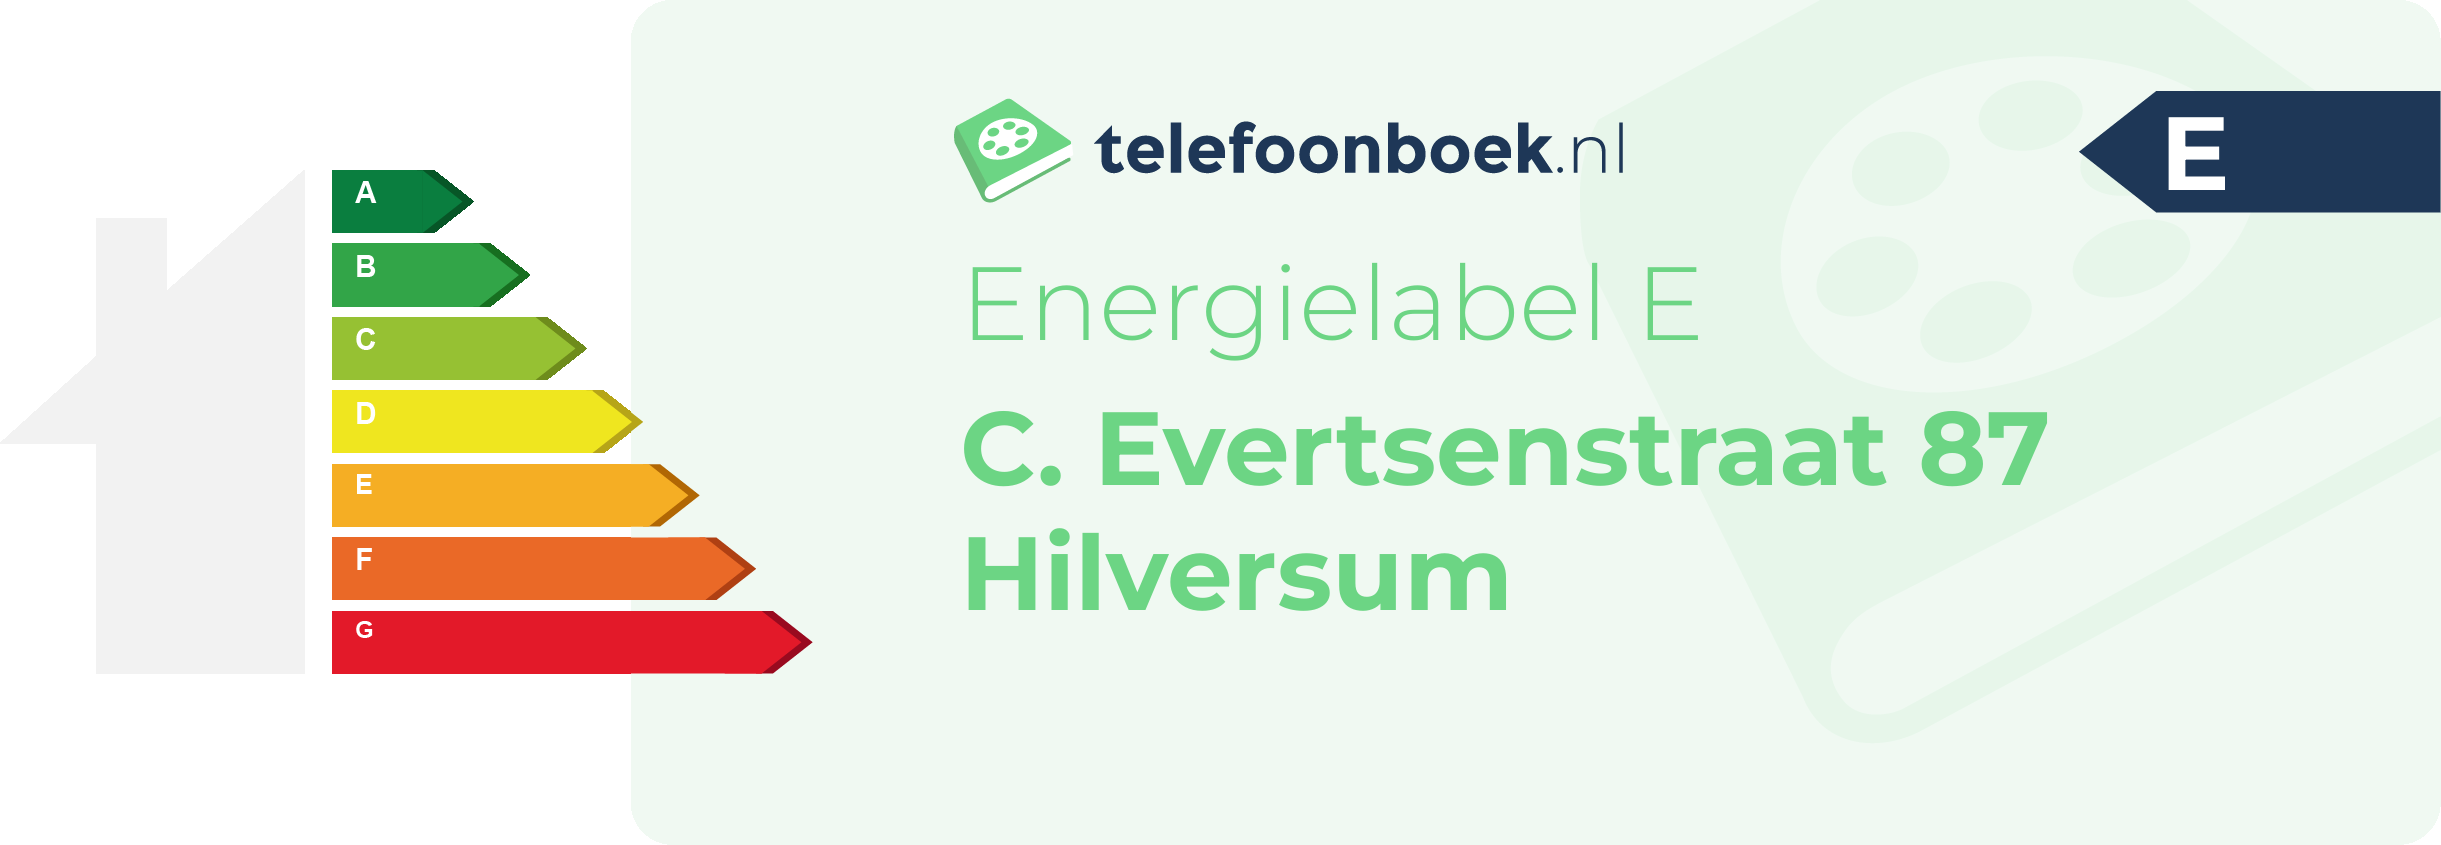 Energielabel C. Evertsenstraat 87 Hilversum